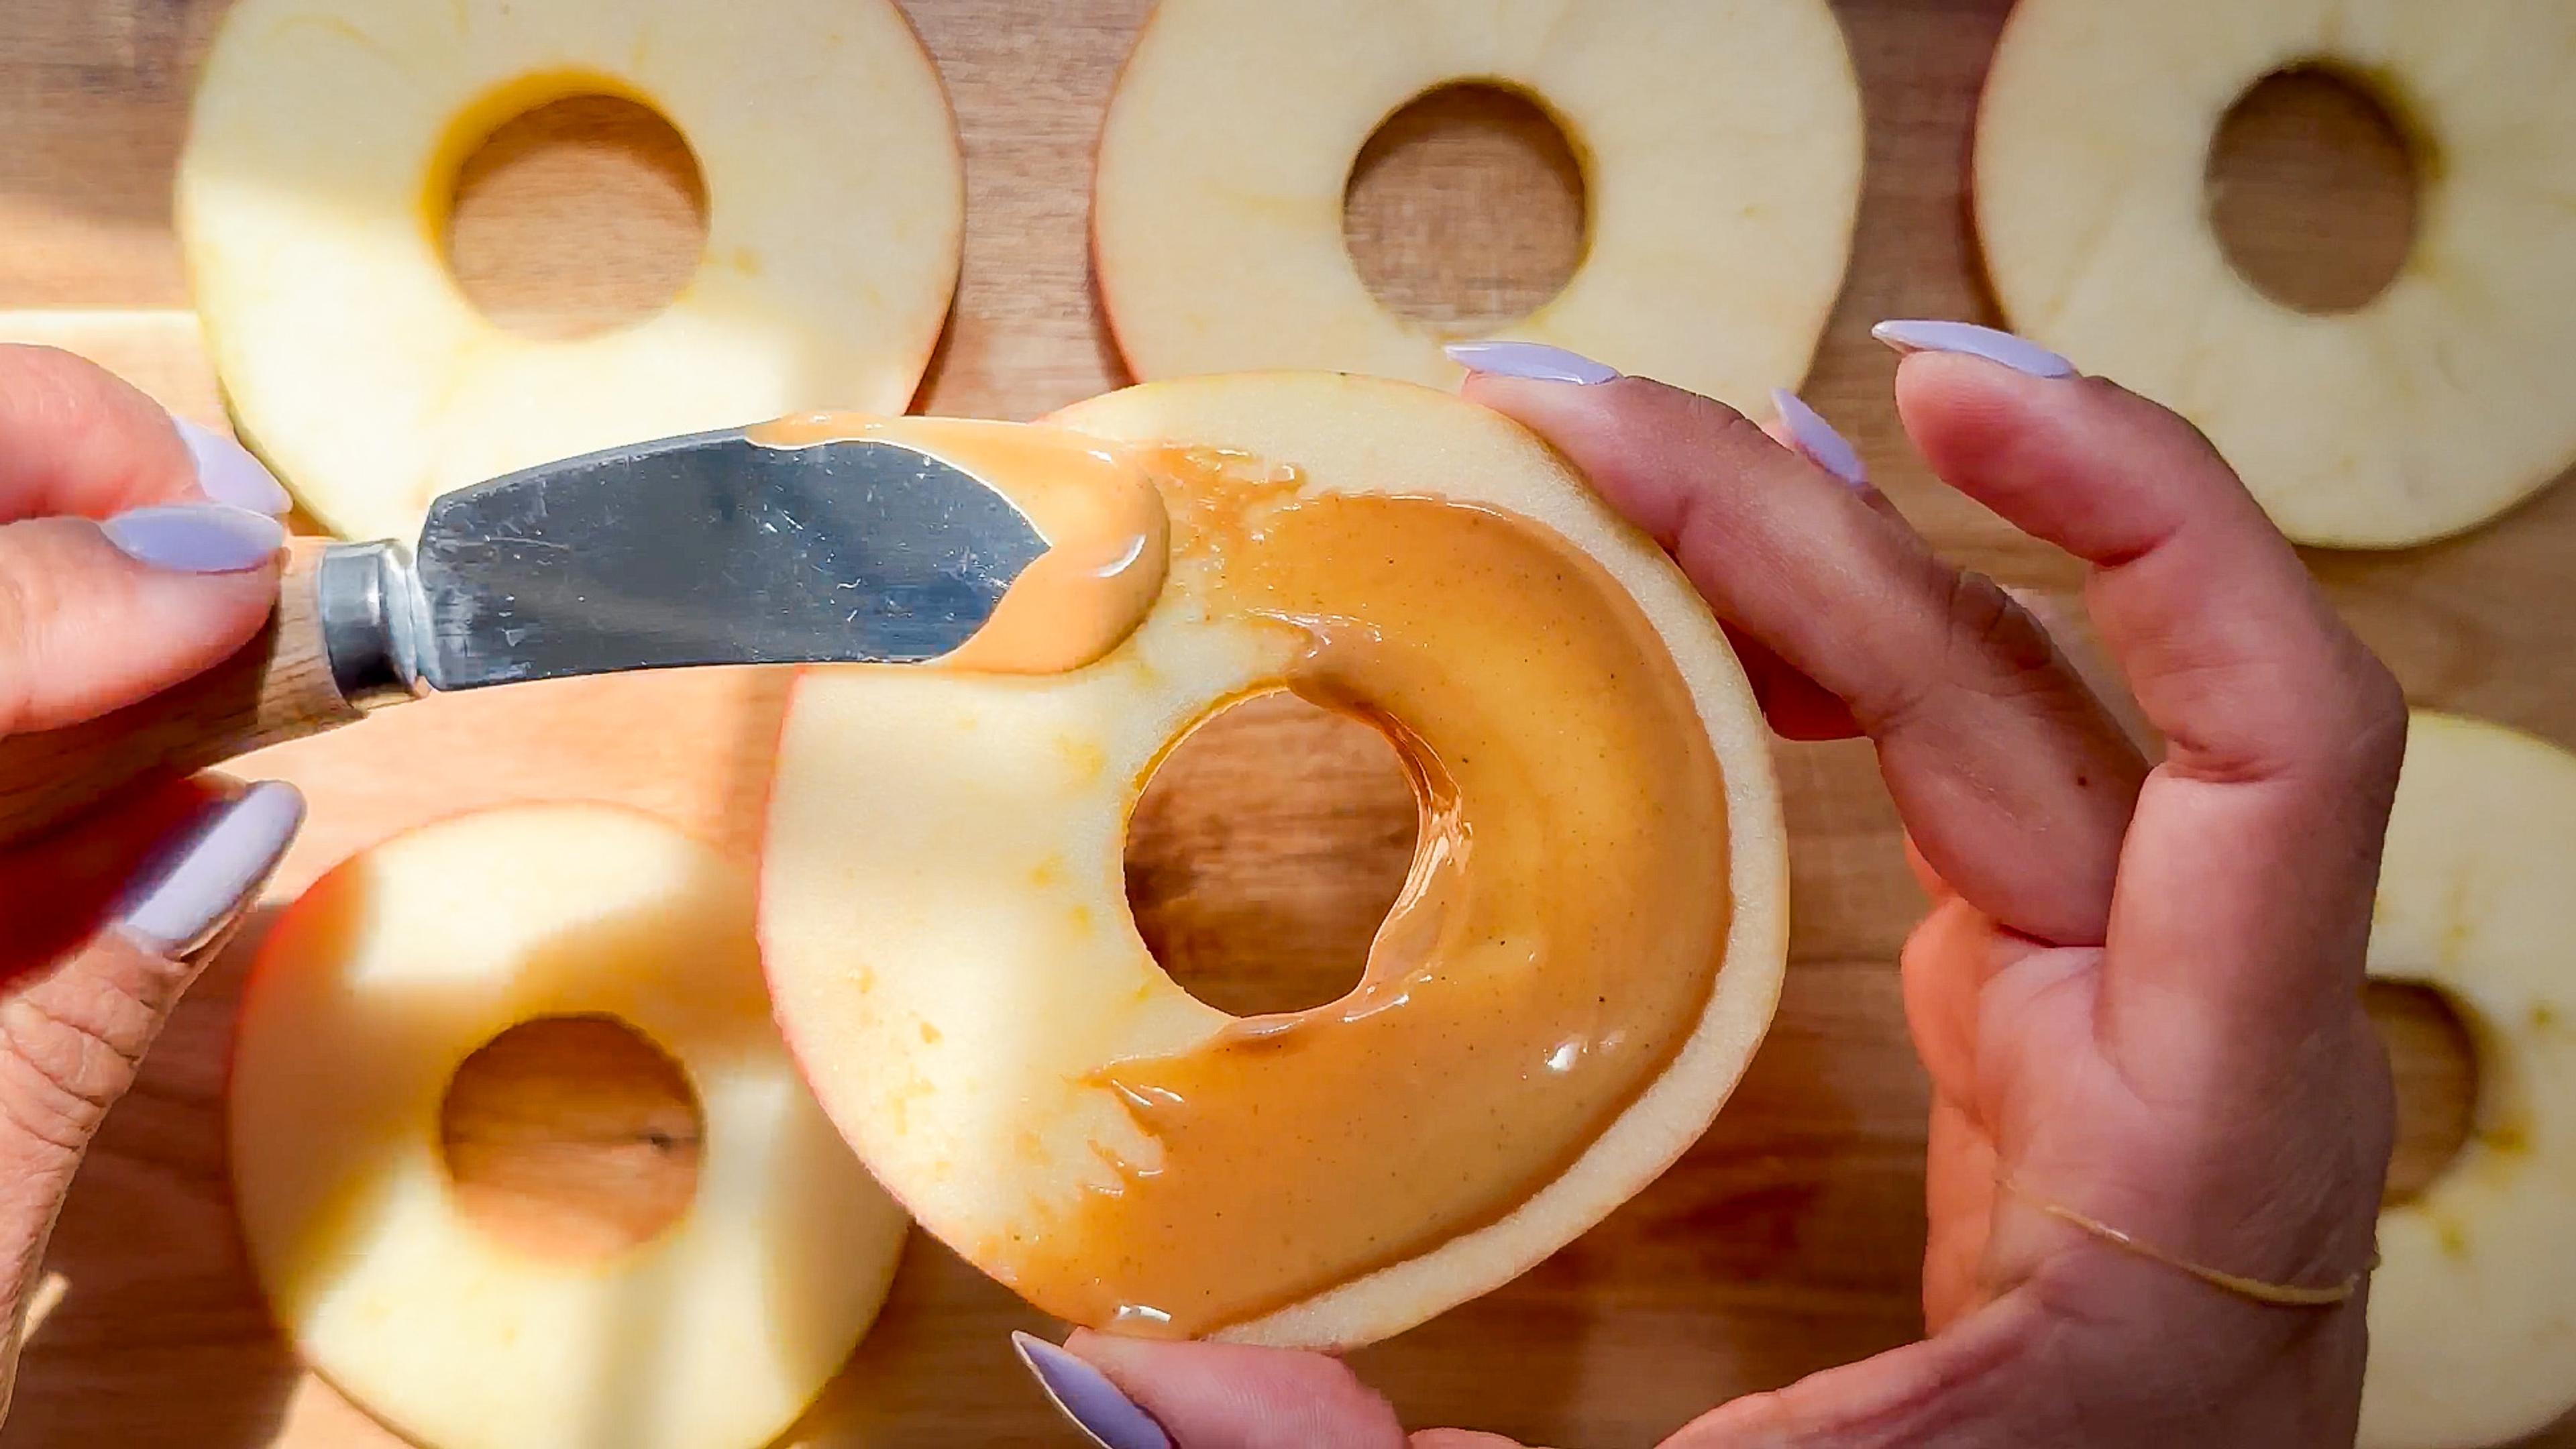 Drizzled Apple “Donut” Snacks